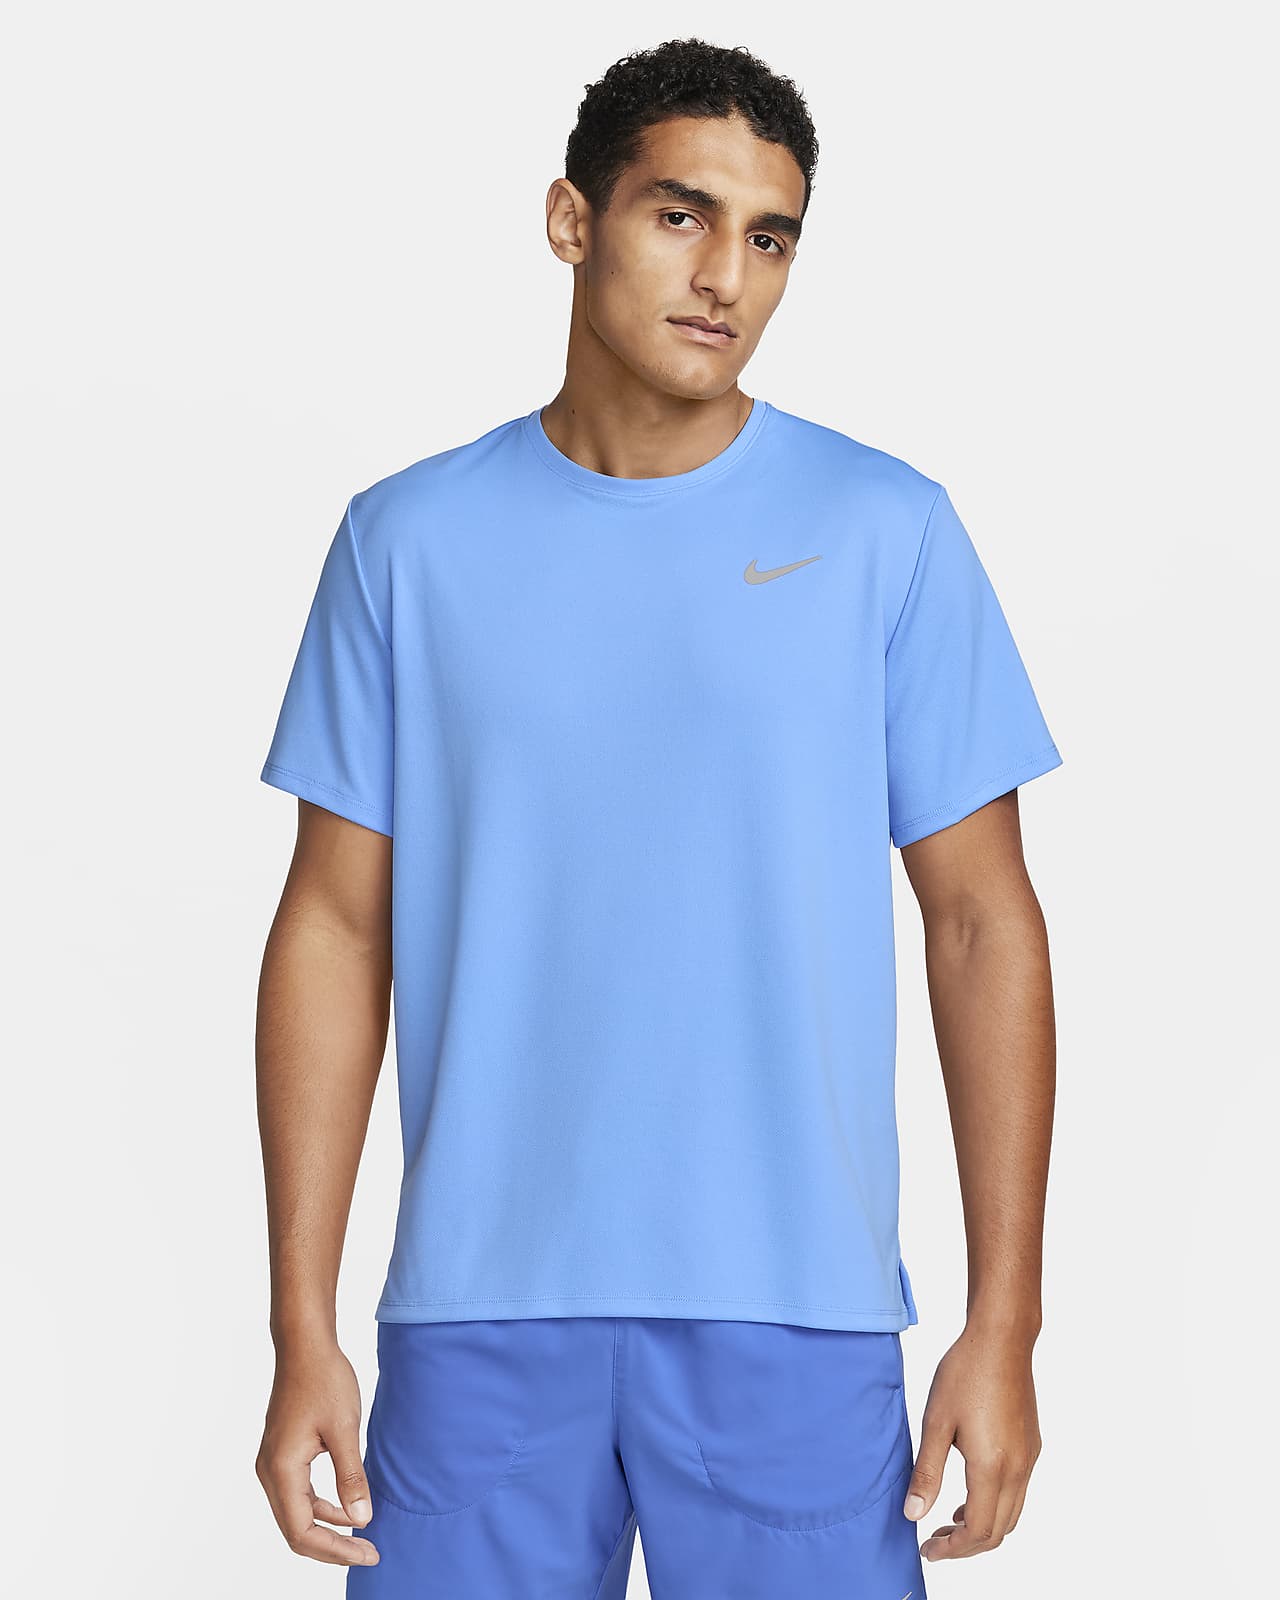 Nike Miler Men's Dri-FIT UV Short-Sleeve Running Top.